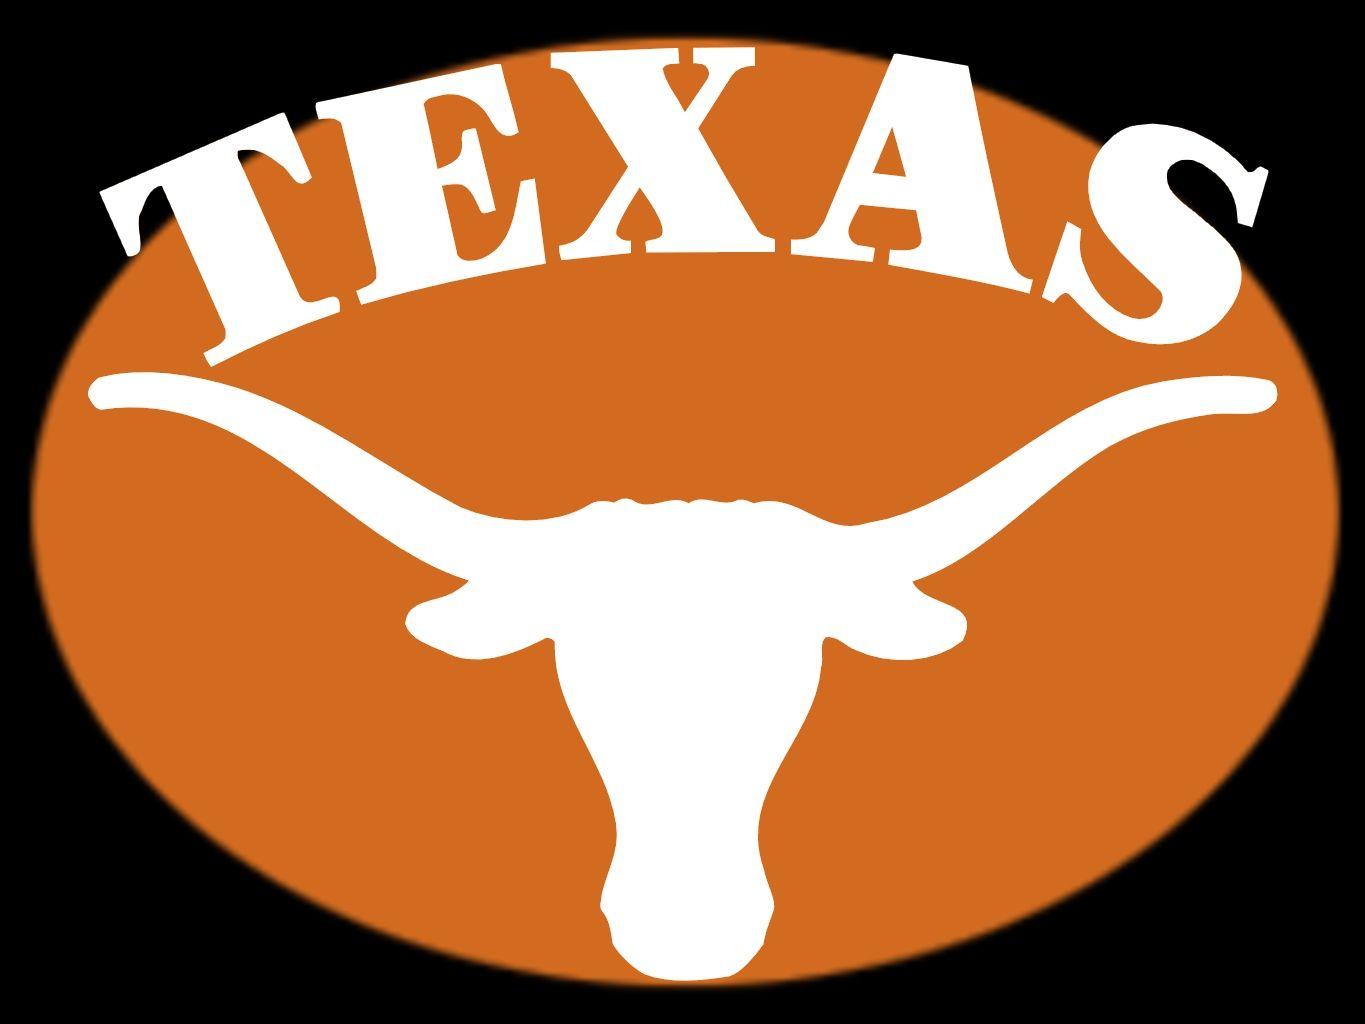 Longhorns Logo - texas longhorns logo images - Google Search | Interesting things to ...